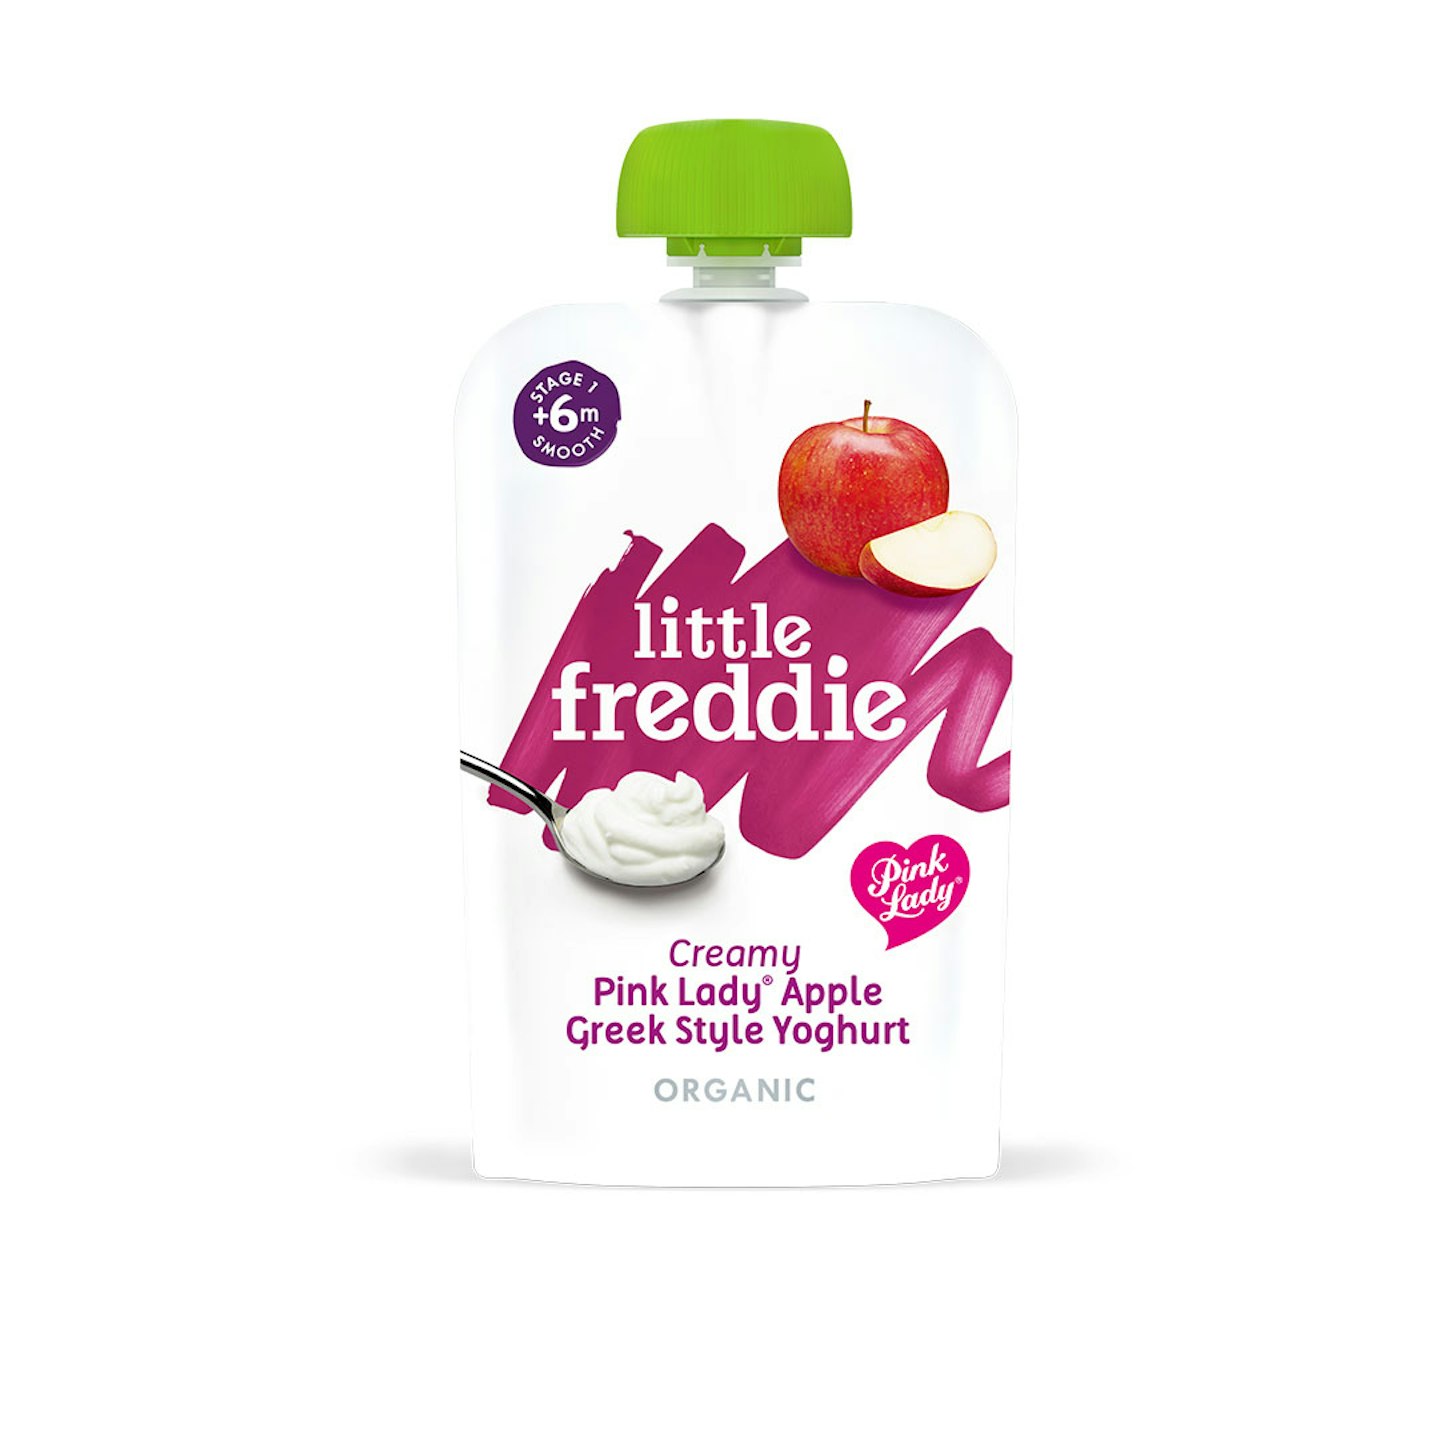 Little Freddie Greek Style Yoghurts Review